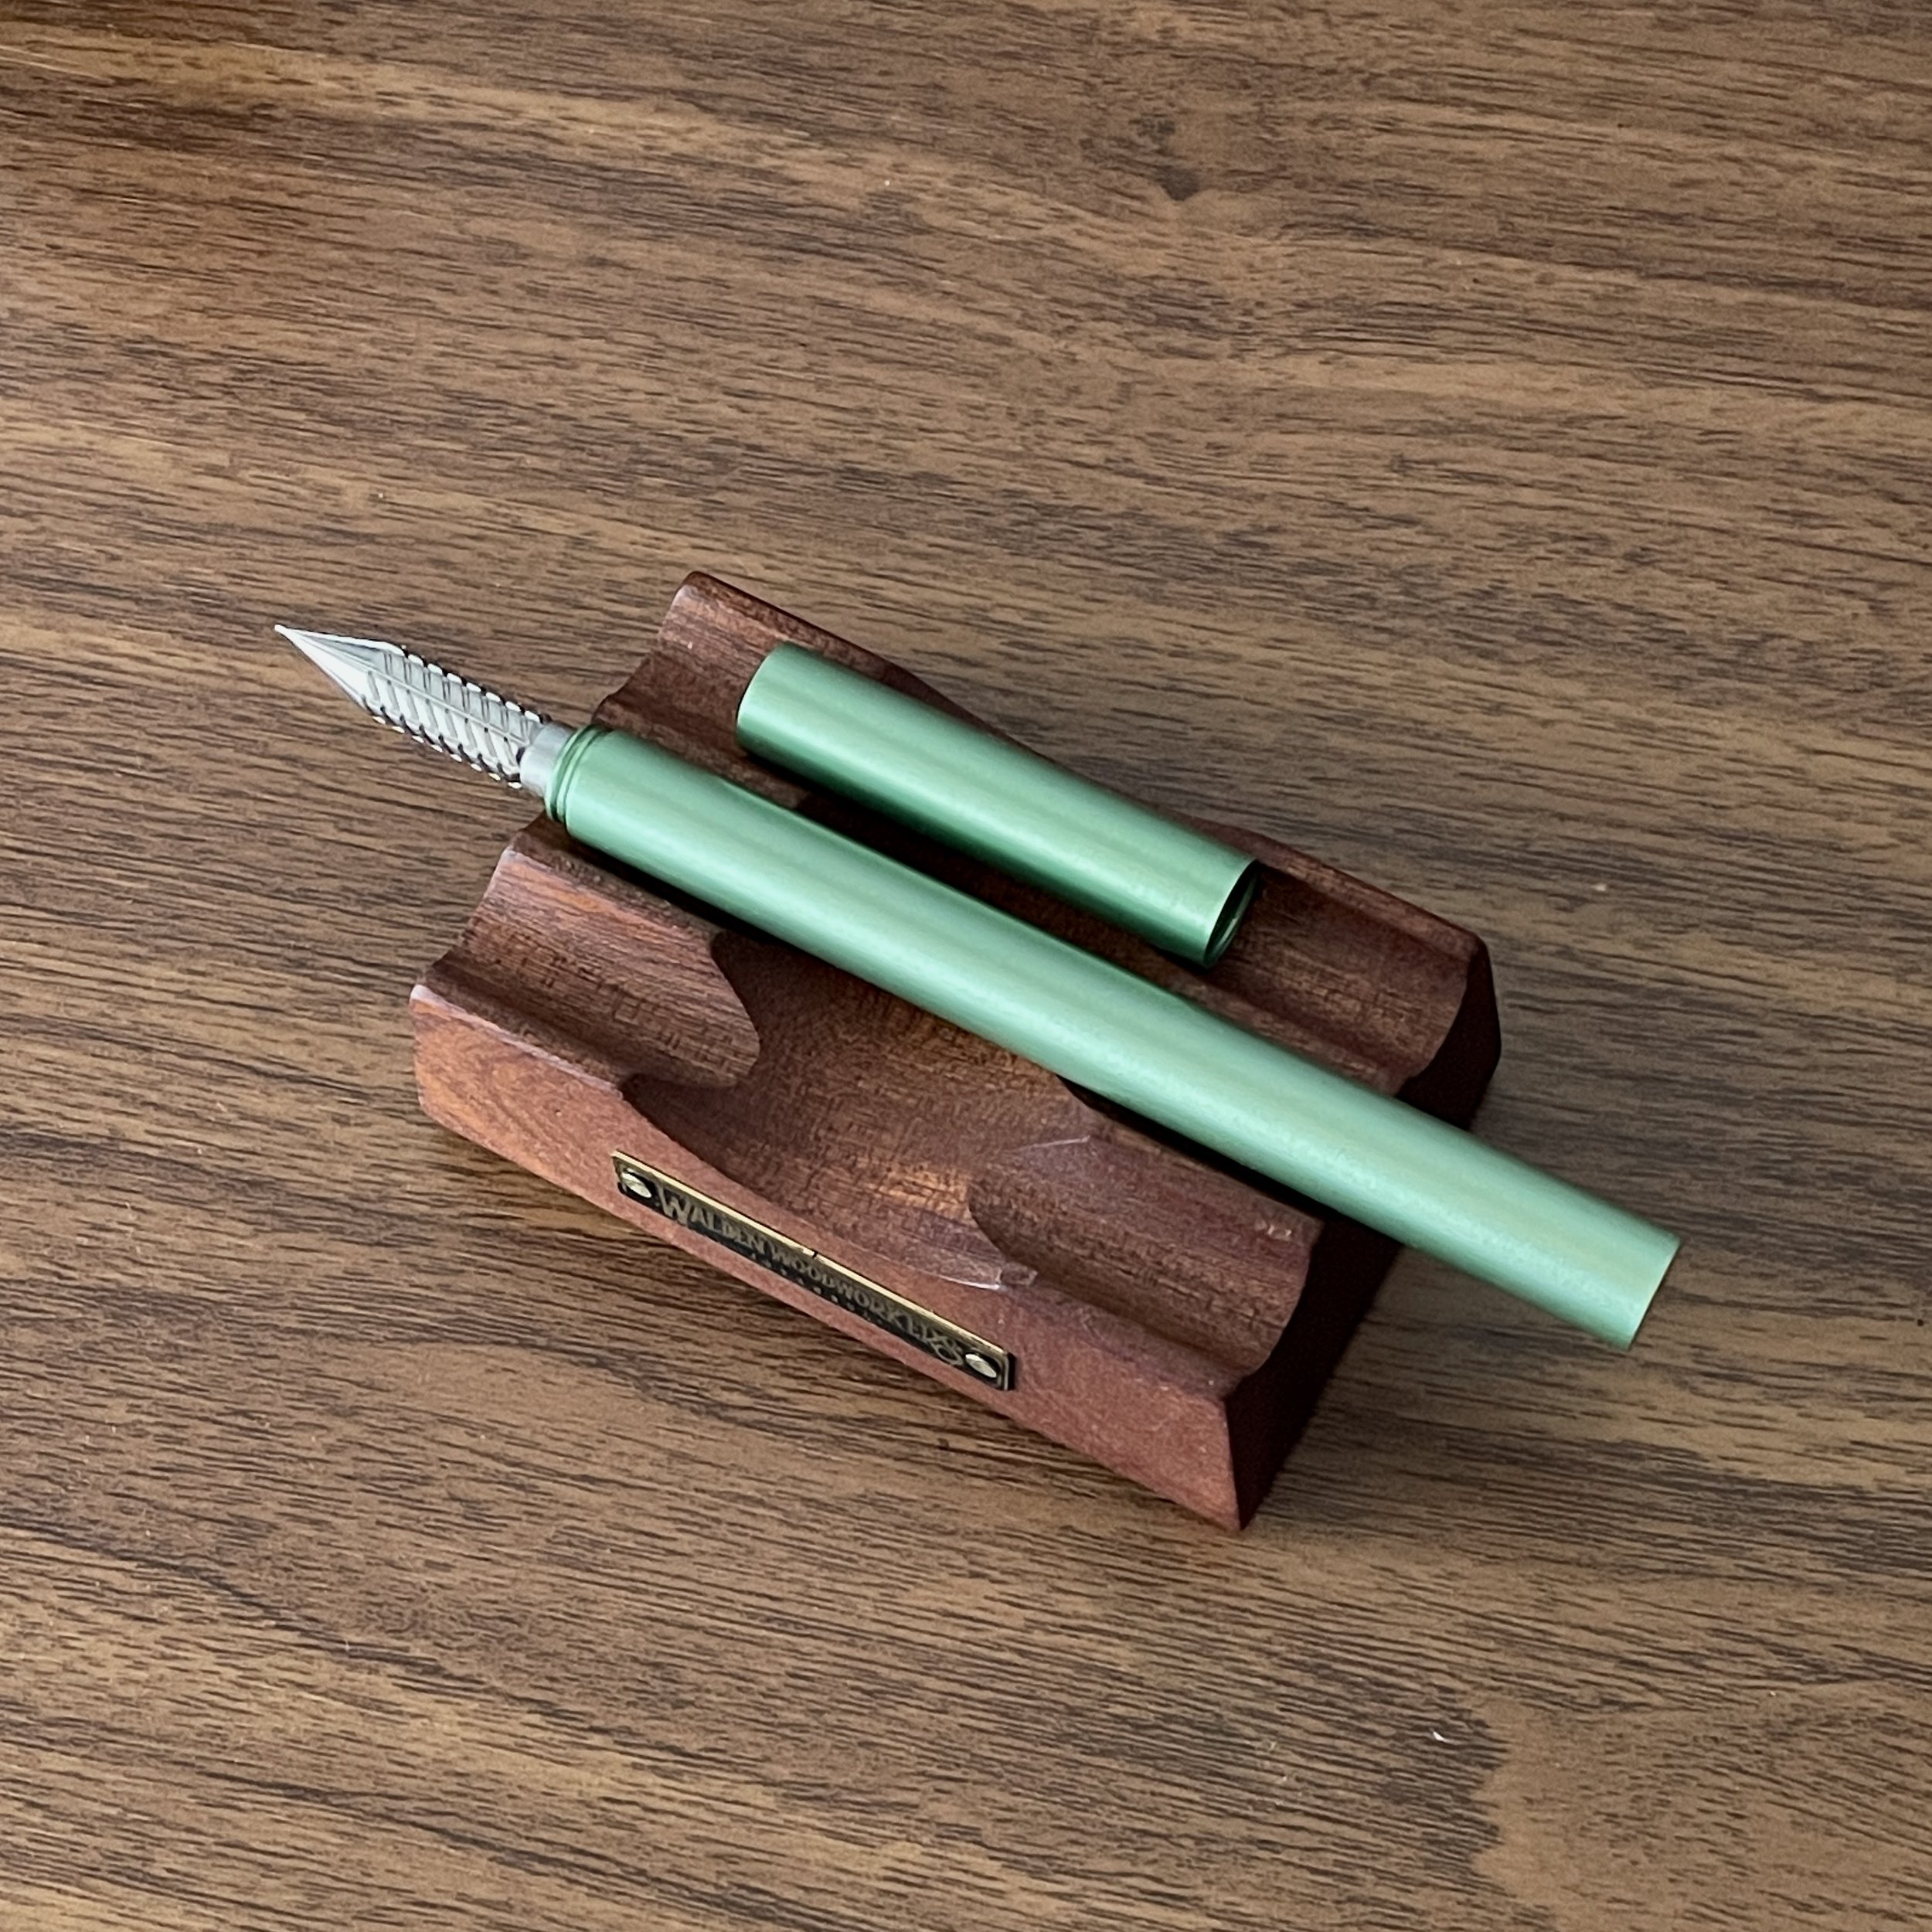 A Steel Dip Pen Nib : 9 Steps - Instructables